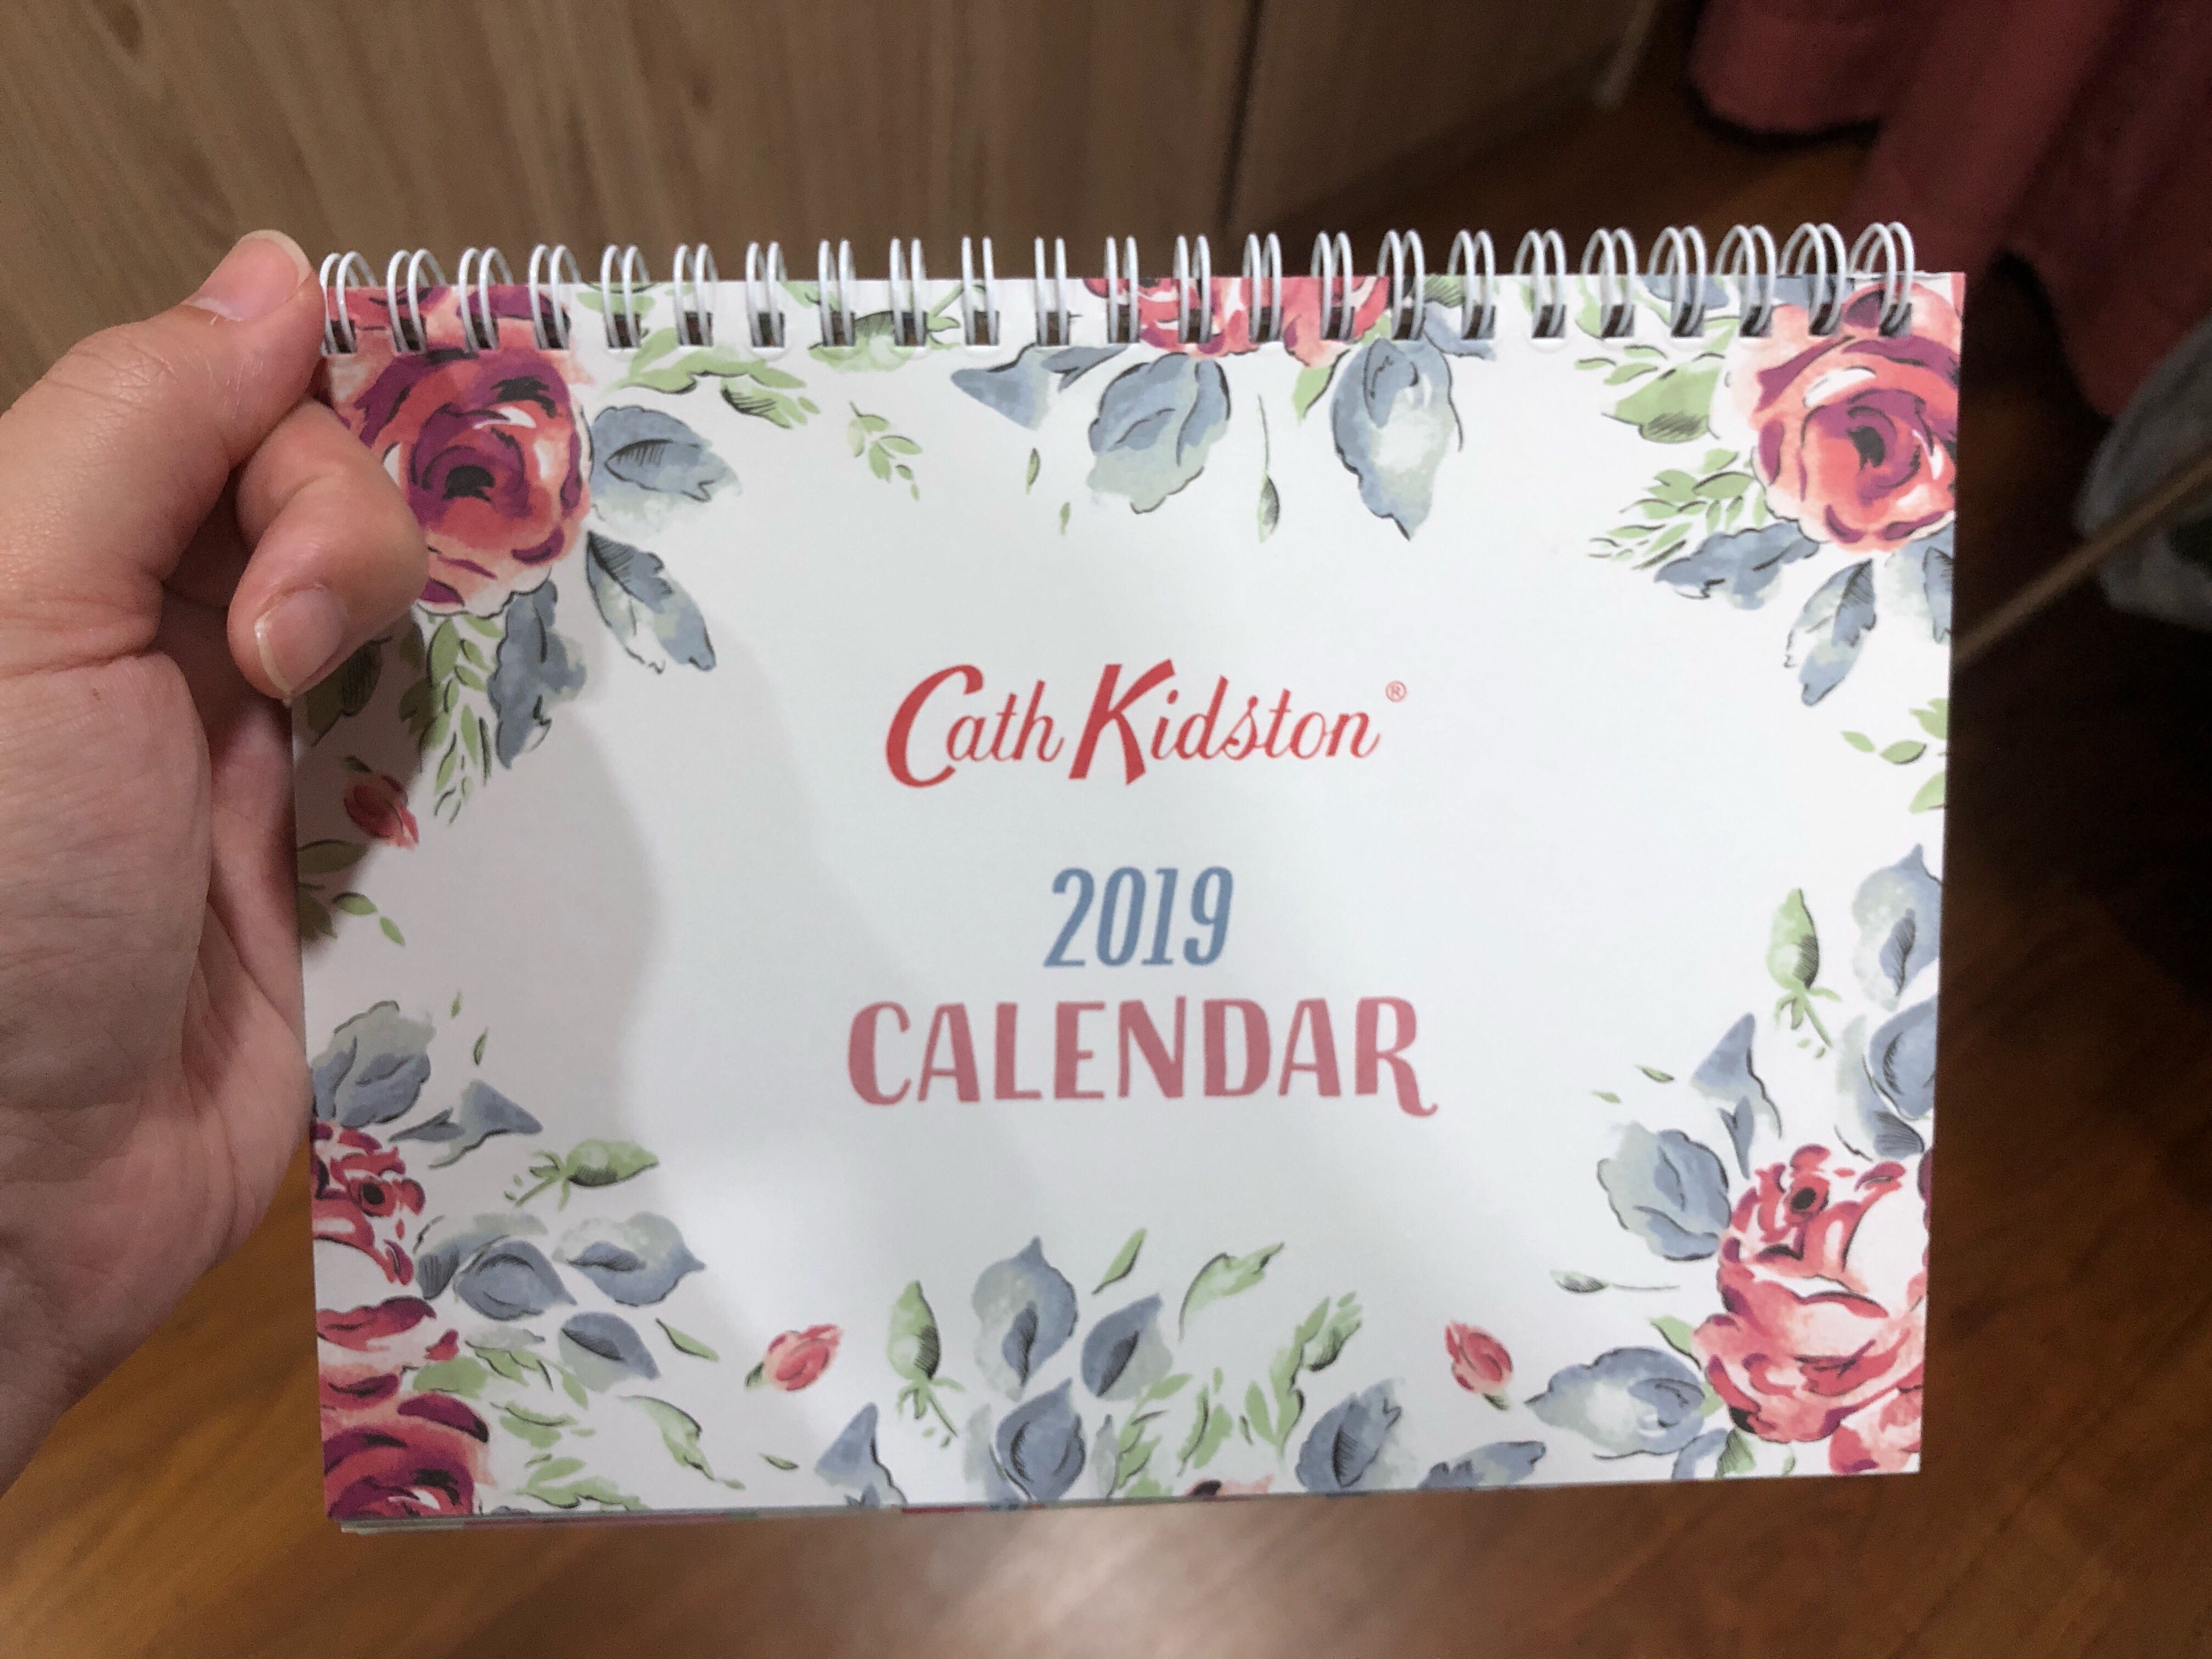 cath kidston calendar